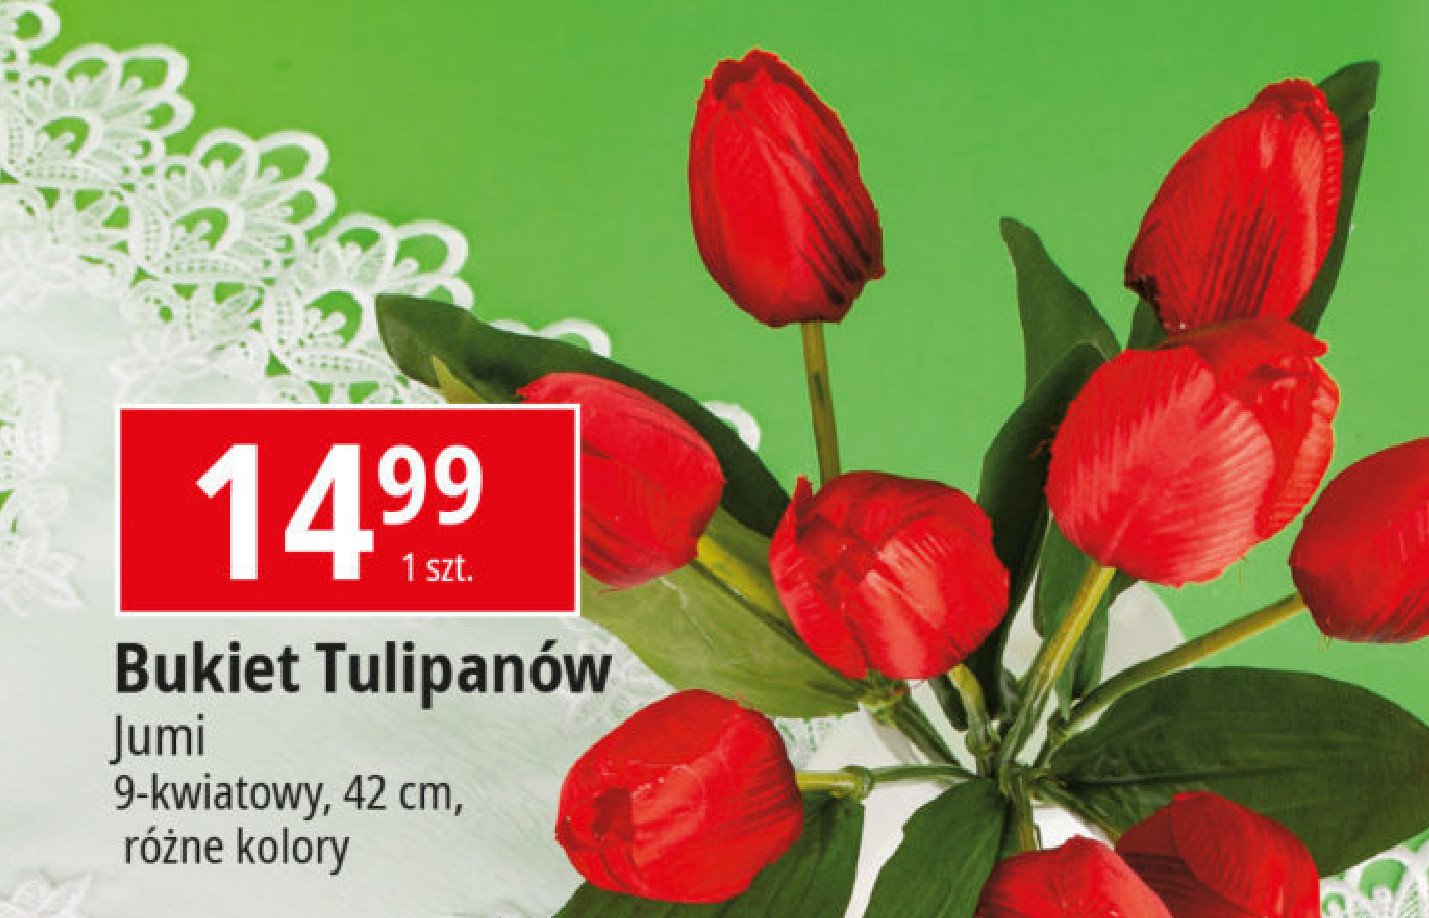 Bukiet tulipanow Jumi promocja